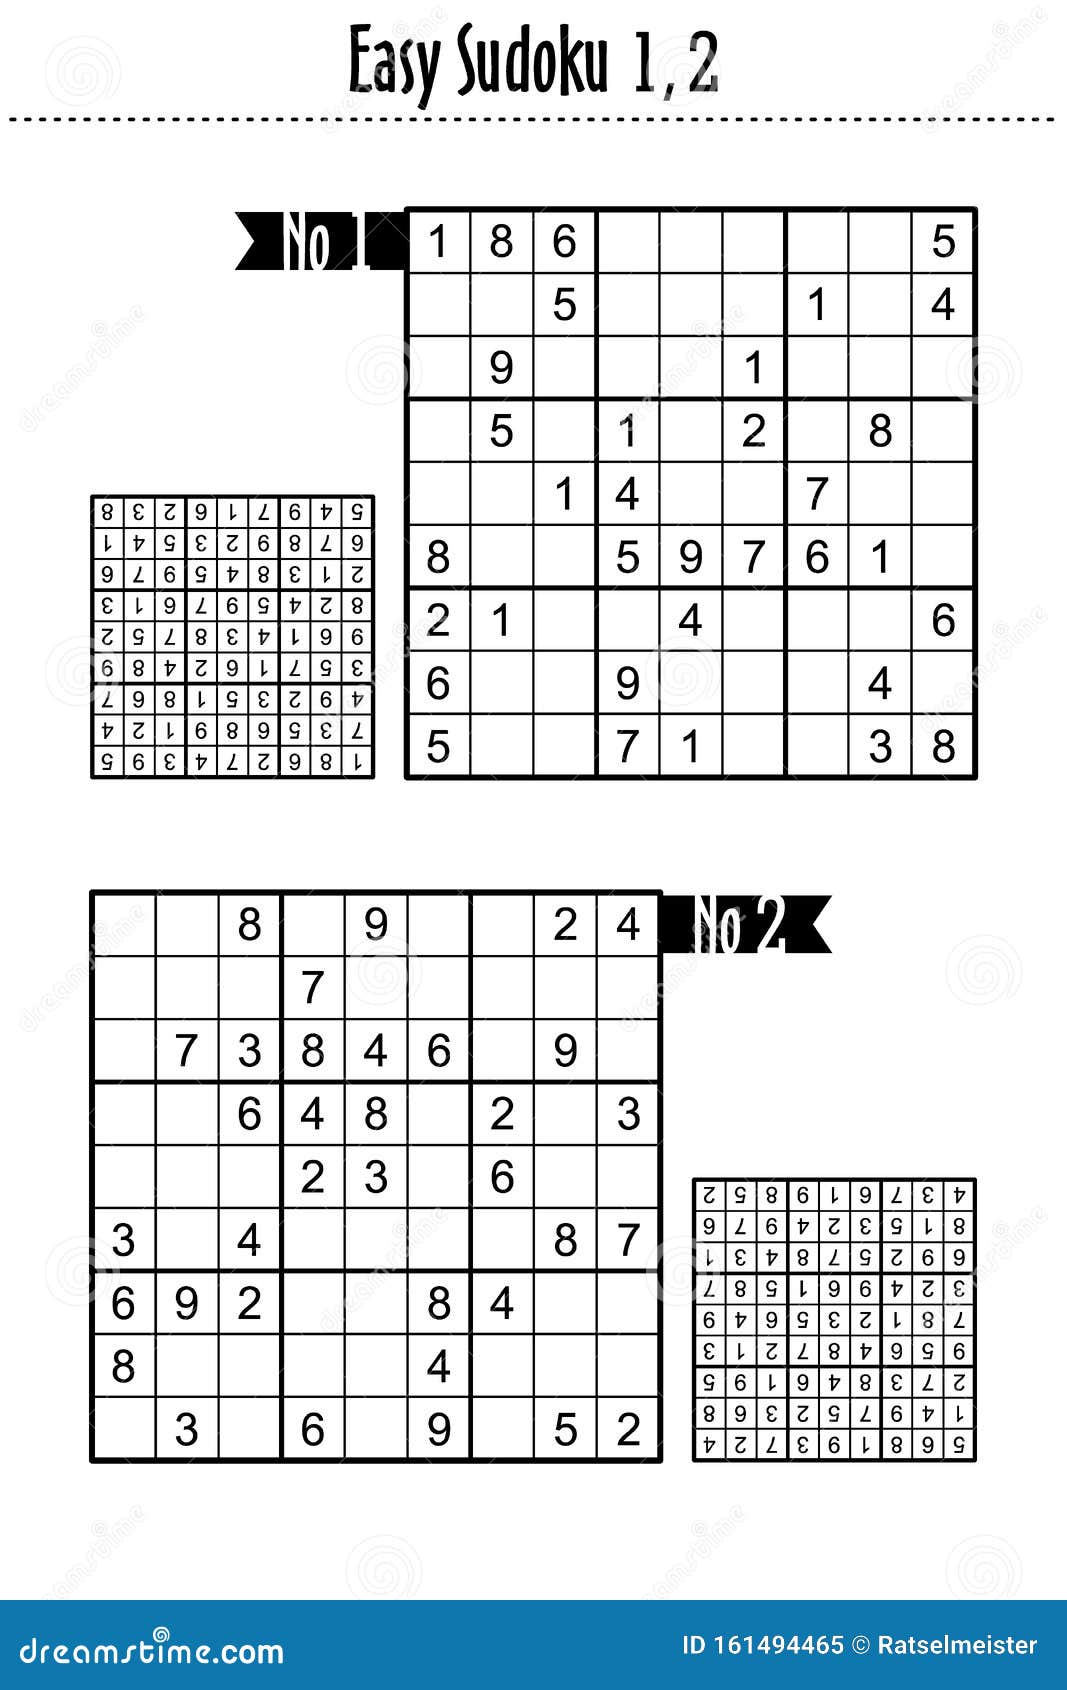 easy level sudoku puzzles 1, 2